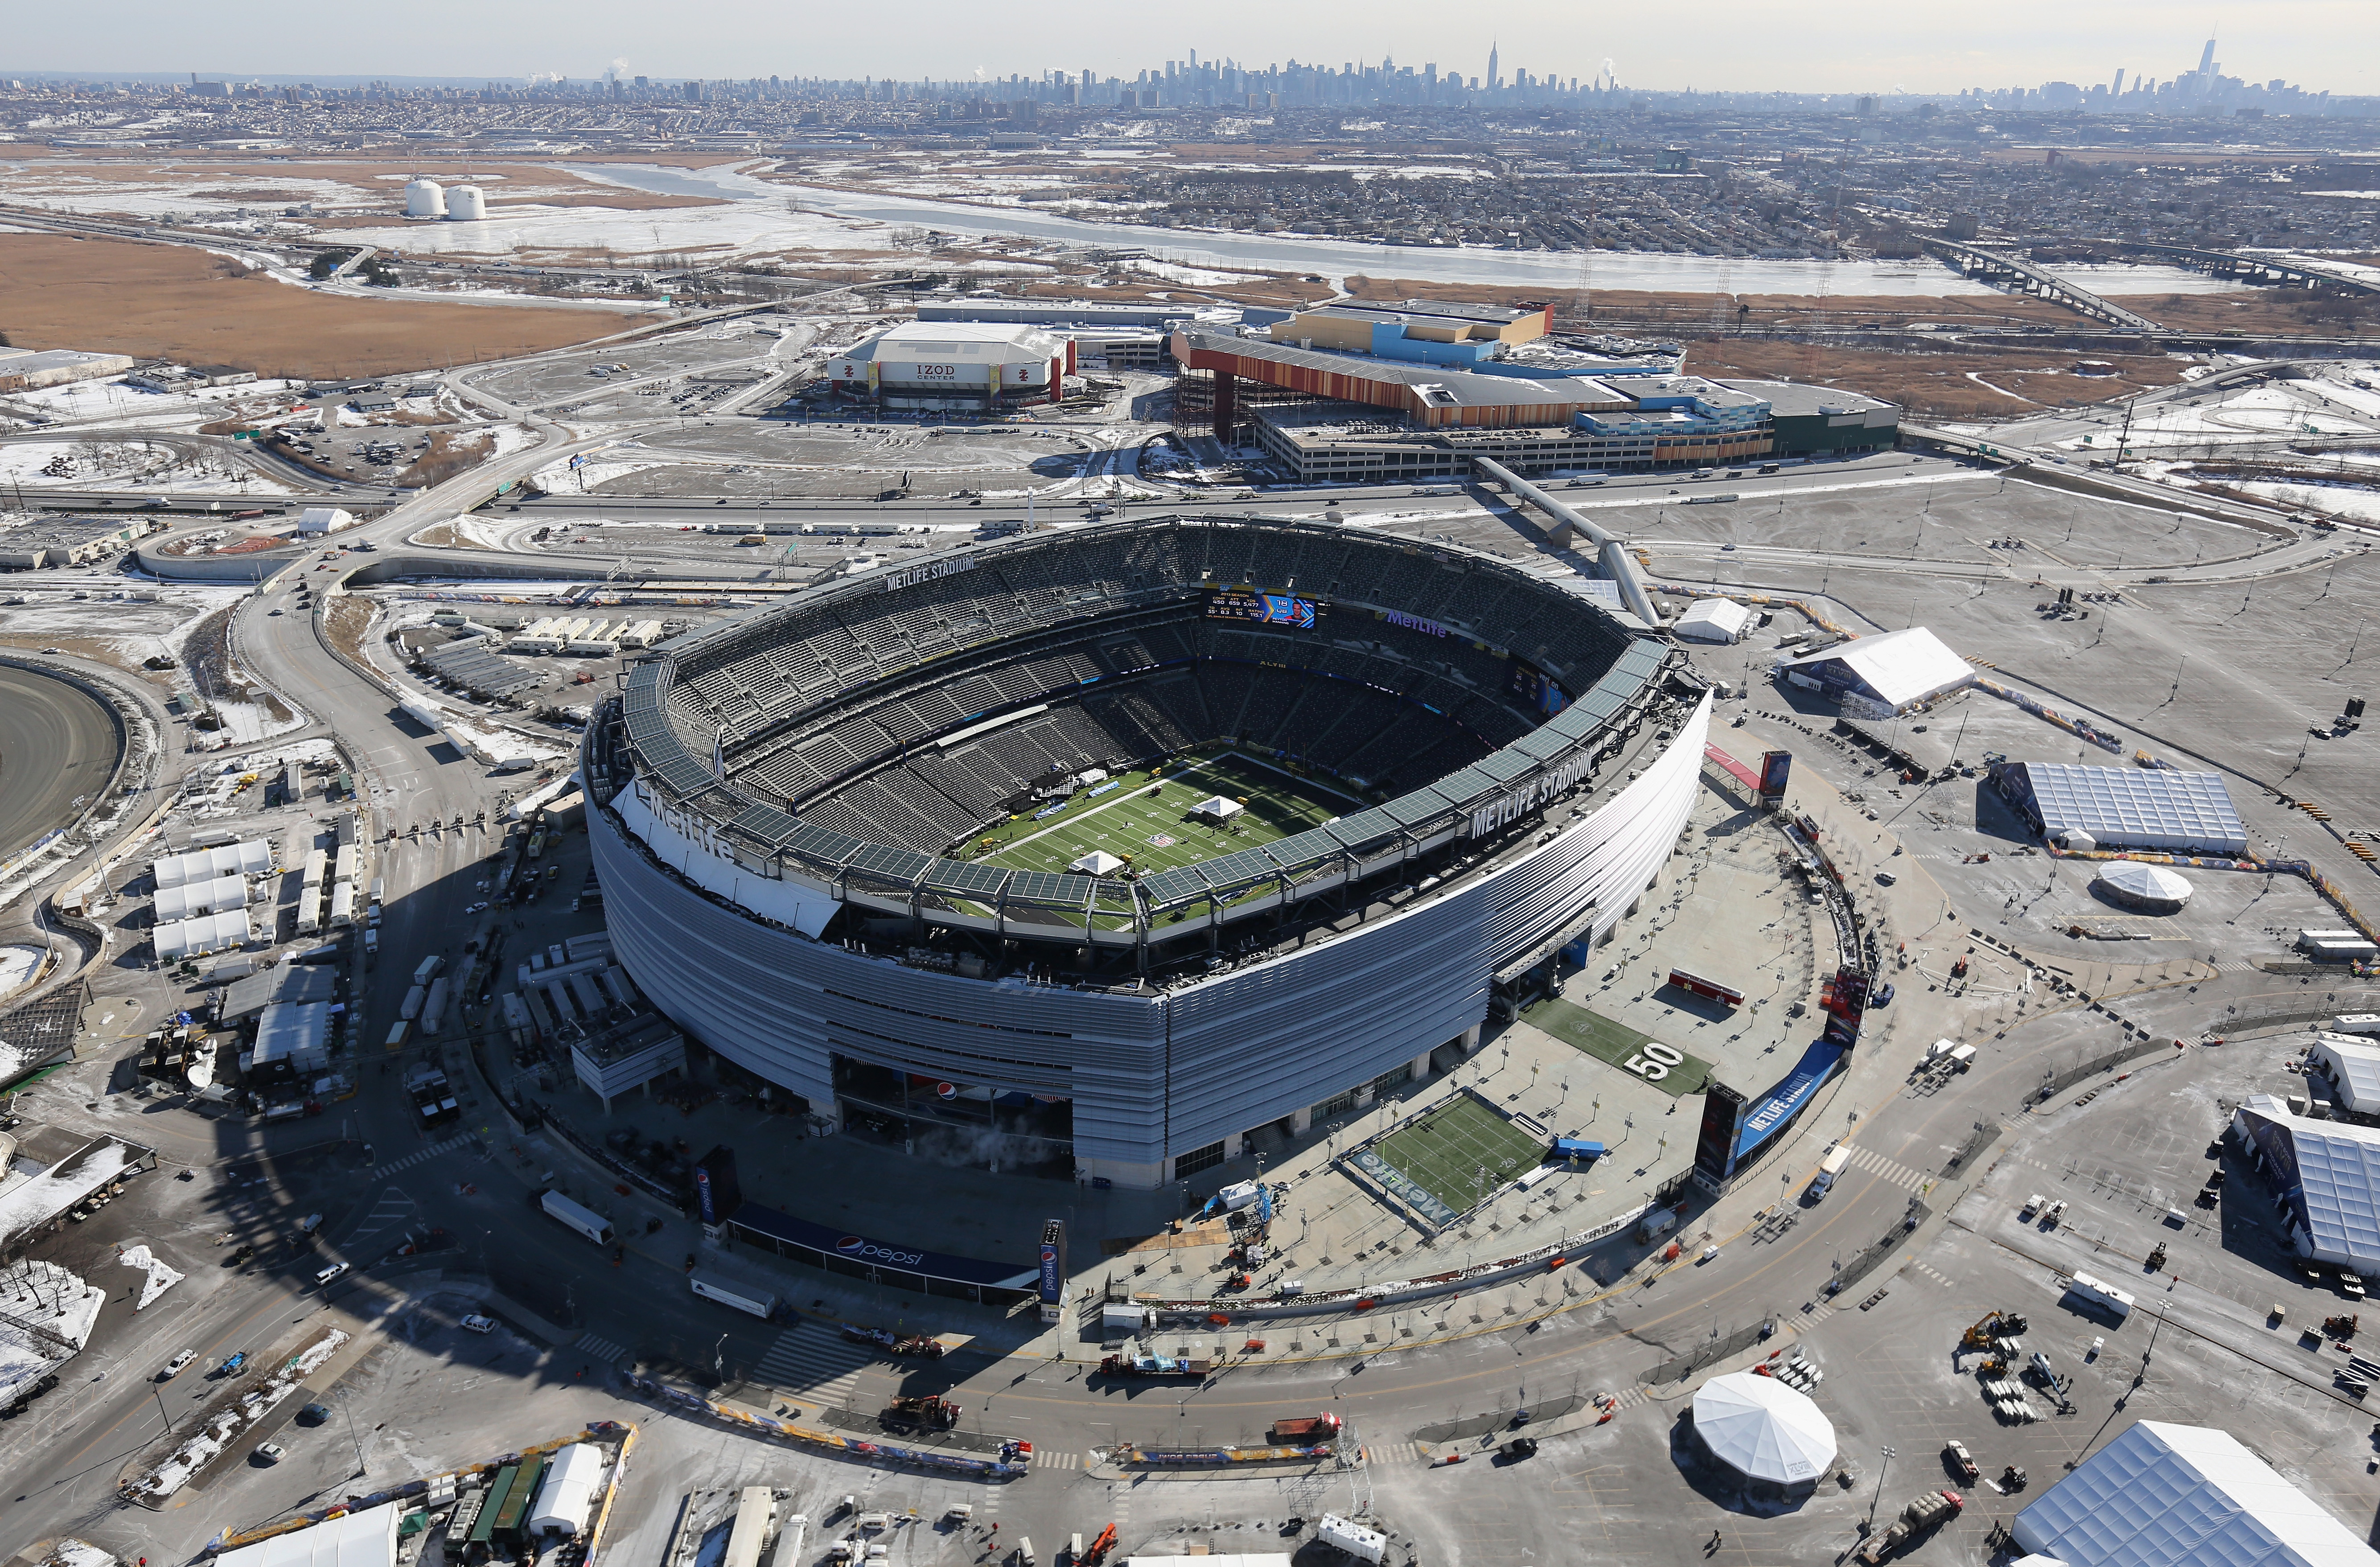 New York Area Prepares For Super Bowl XLVIII